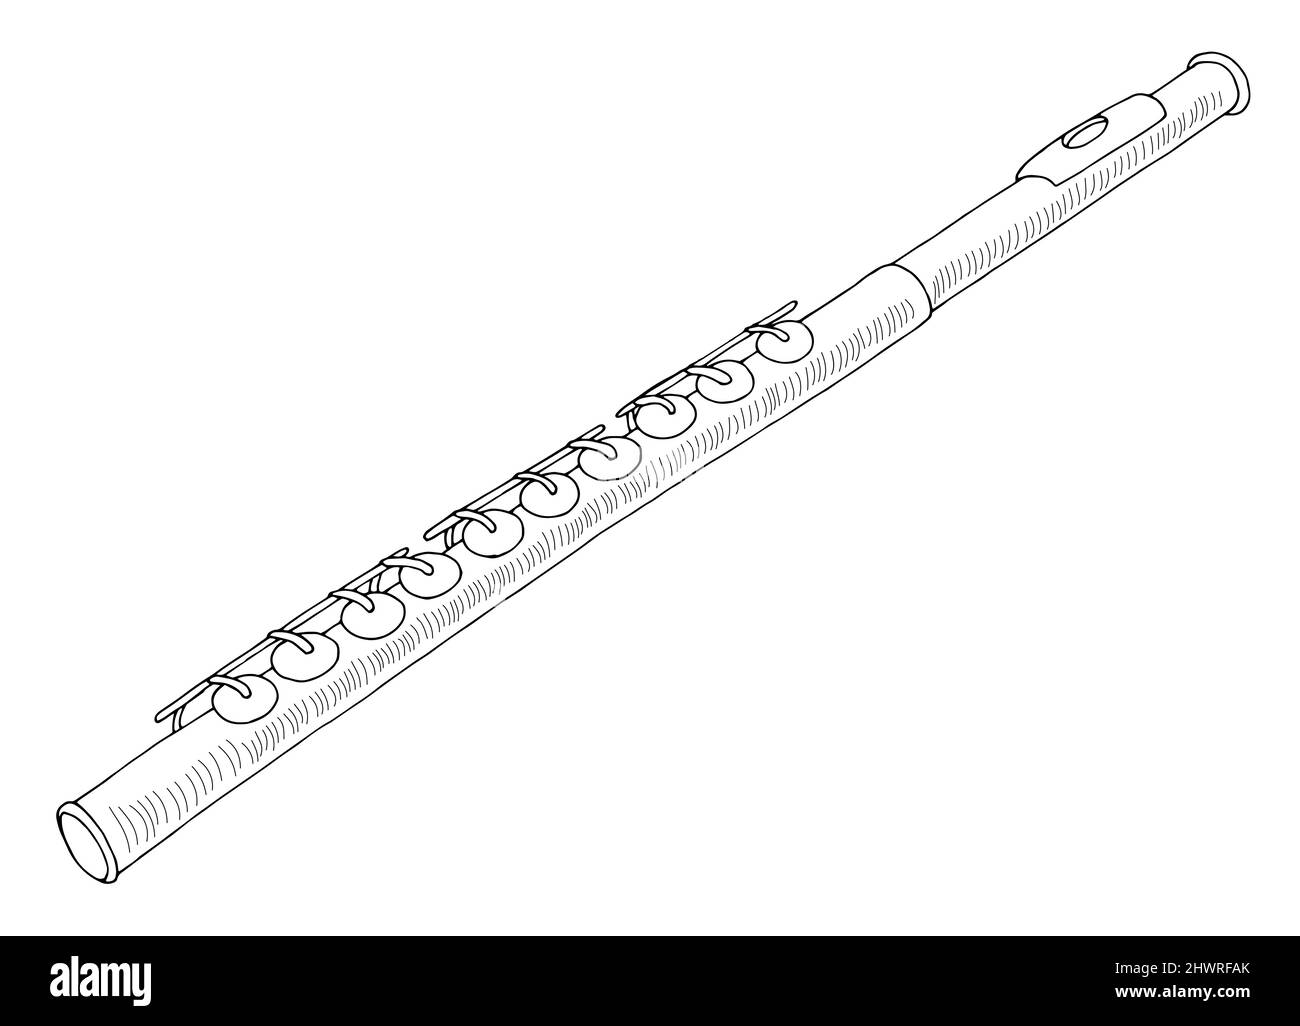 flute clip art black and white